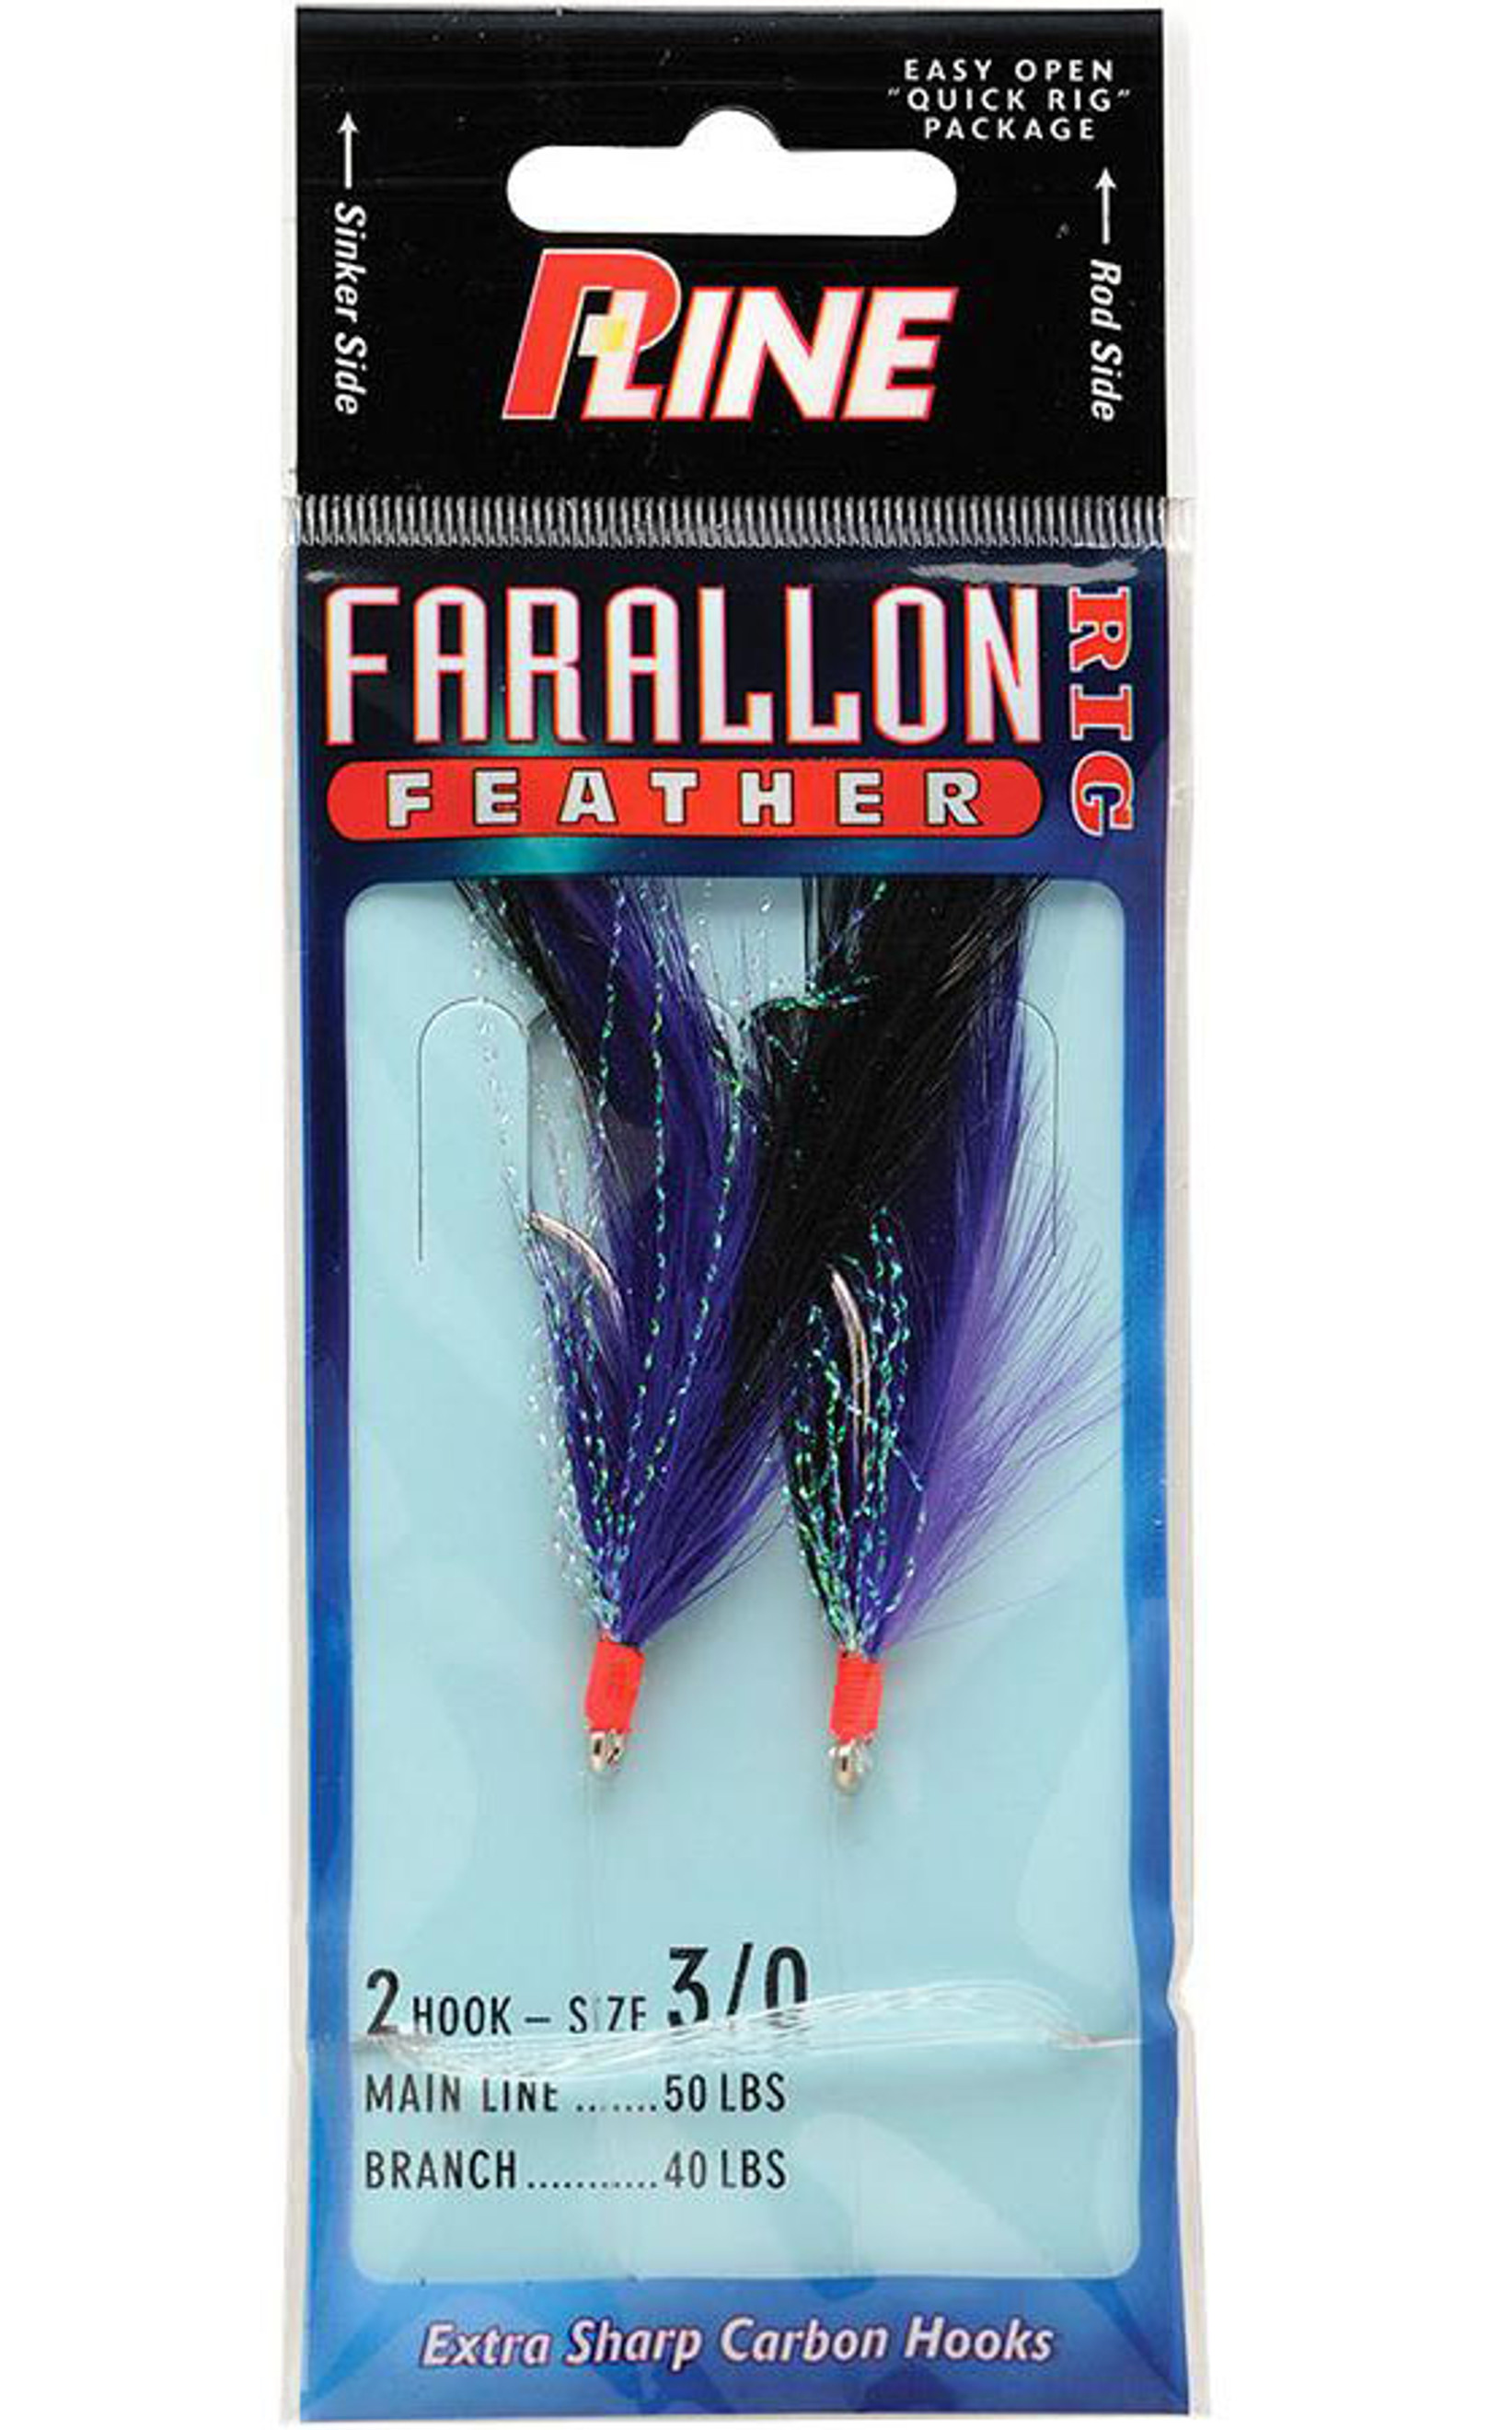 P-Line Farallon Feathers Vertical Fishing Jigs (Size: 5/0 Purple & Black)